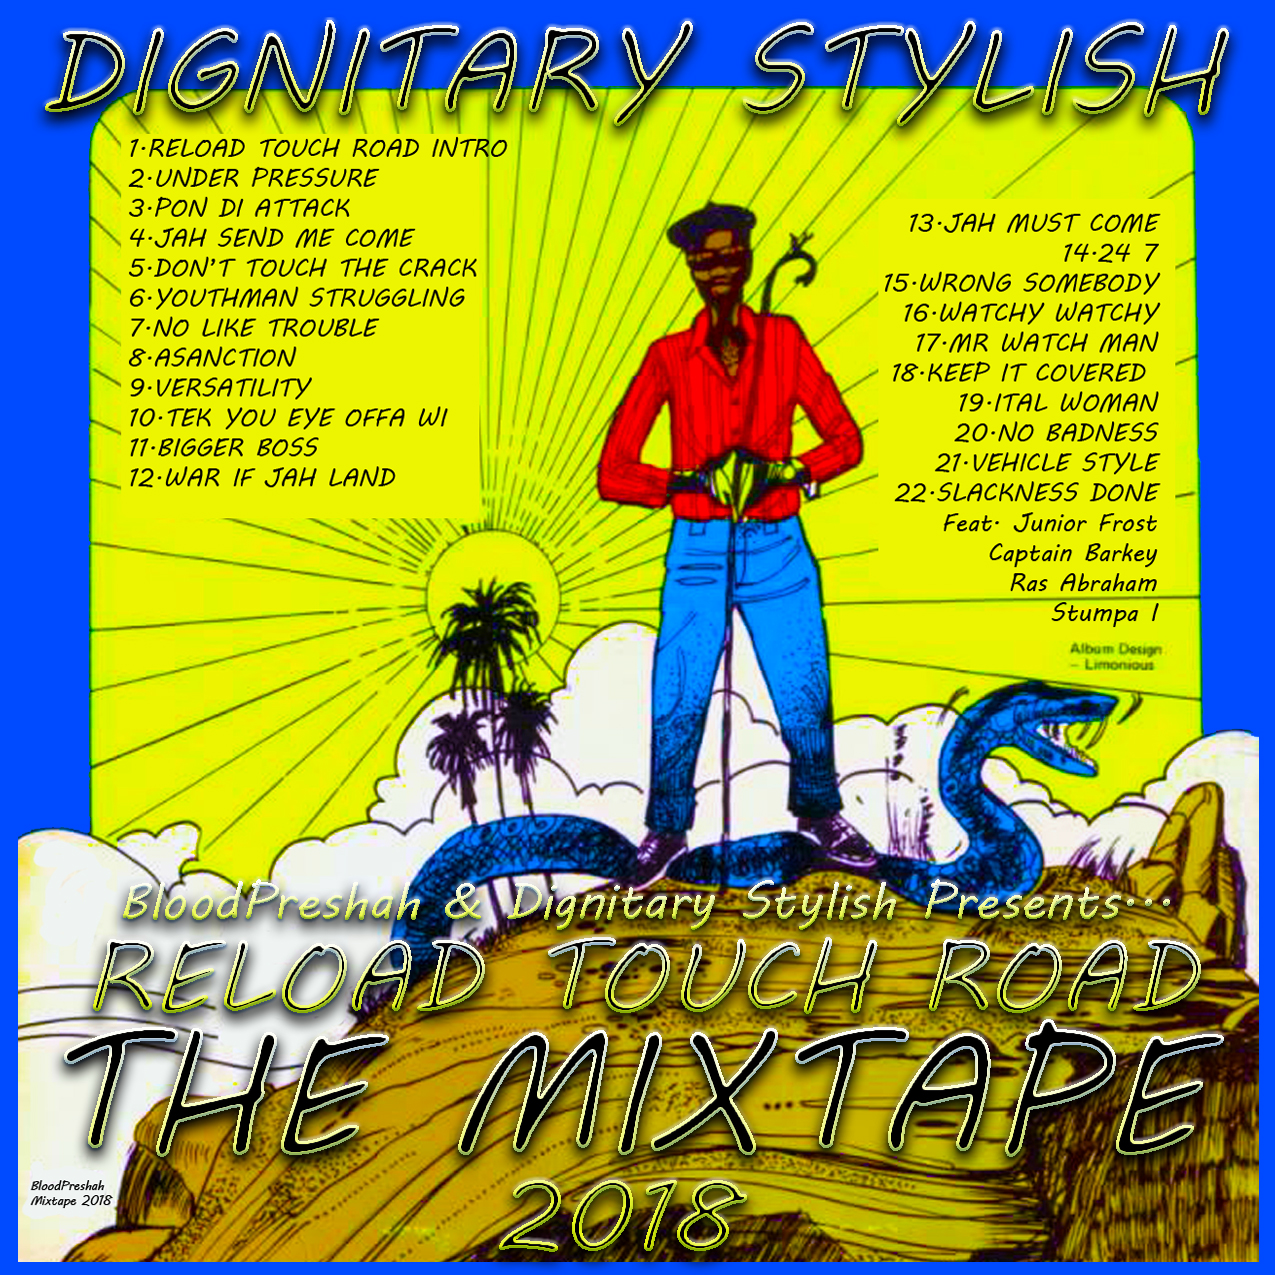 Dignitary Stylish – Don't Touch The Crack Lyrics